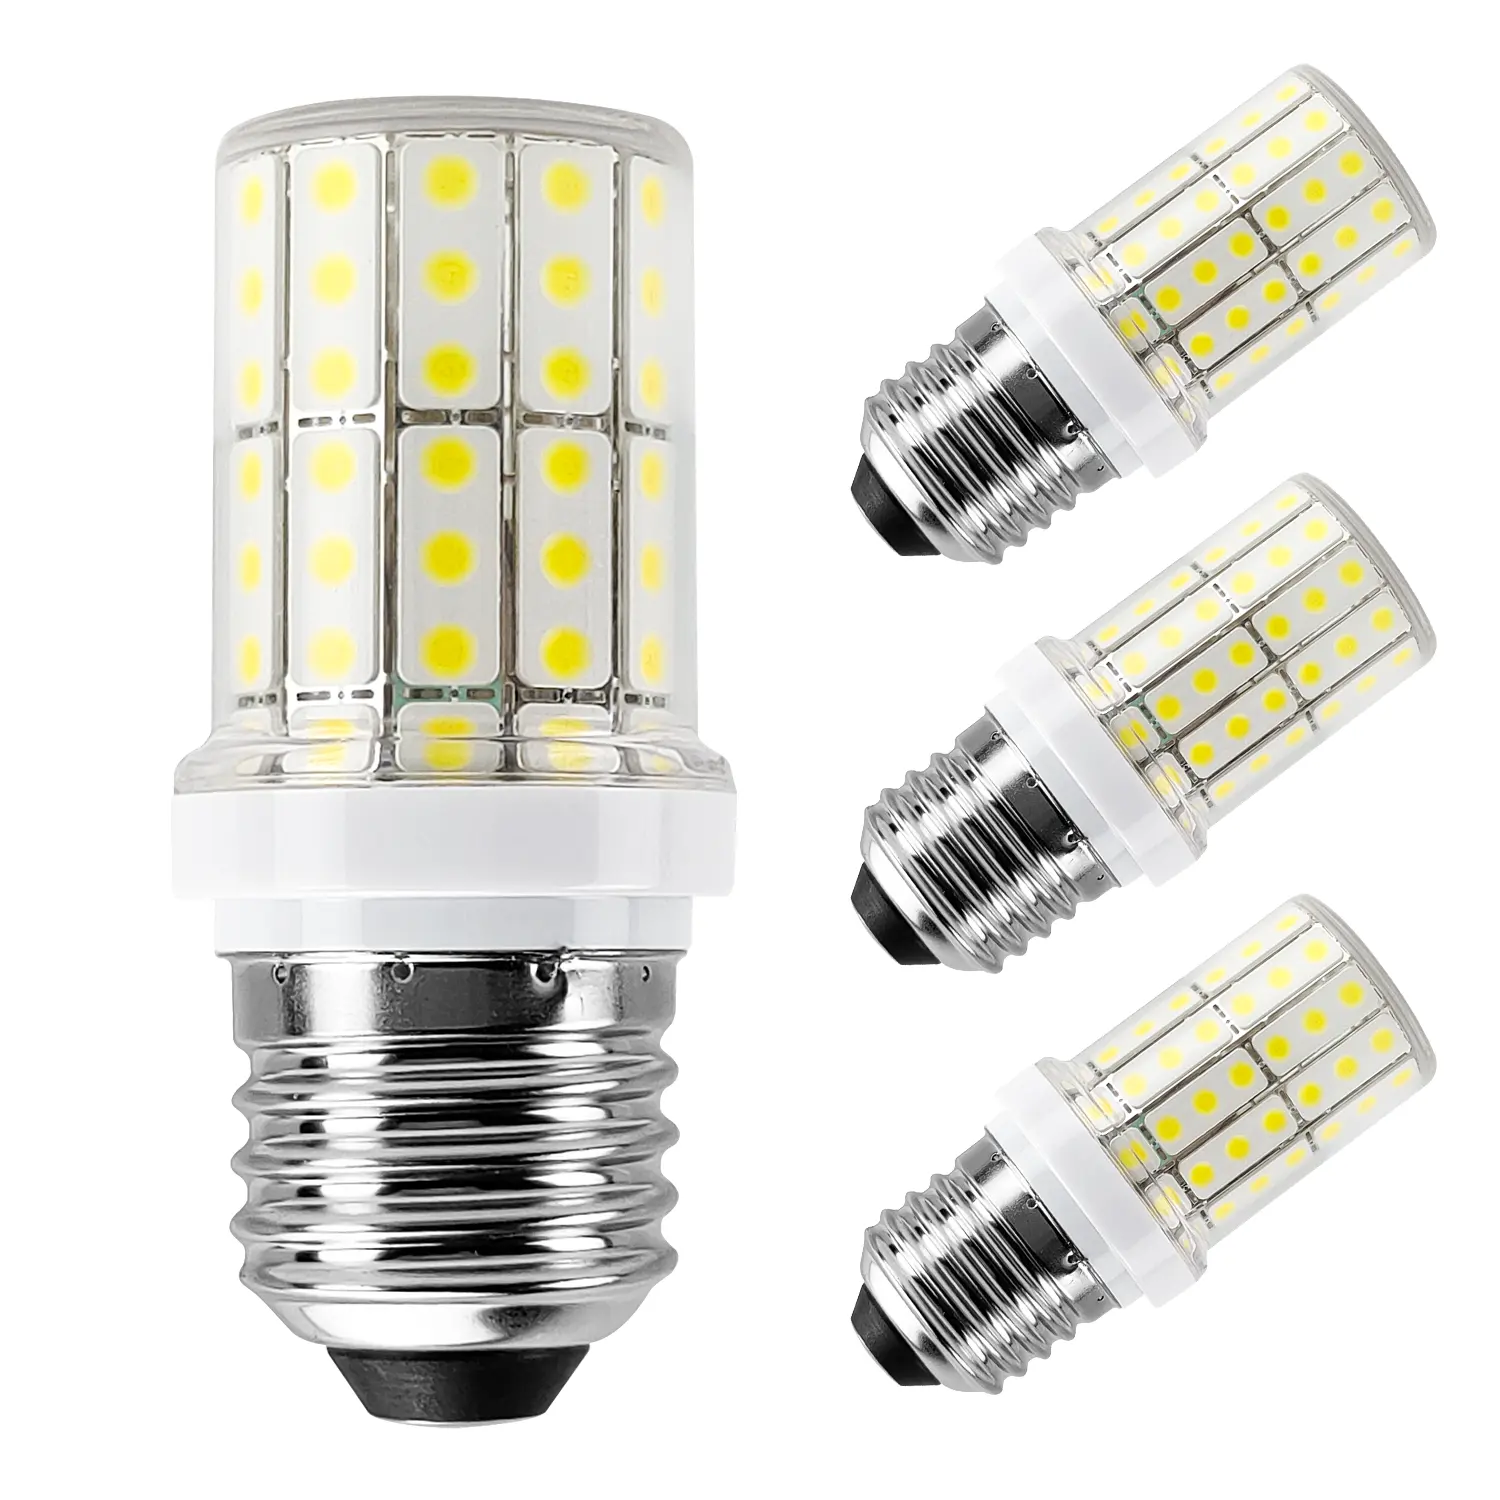 Led Bulb Light Bulb High Brightness LED Corn Bulb E27 E26 Light COB 6W 20W IP65 Waterproof E27 LED Lighting Corn Bulb Lamp